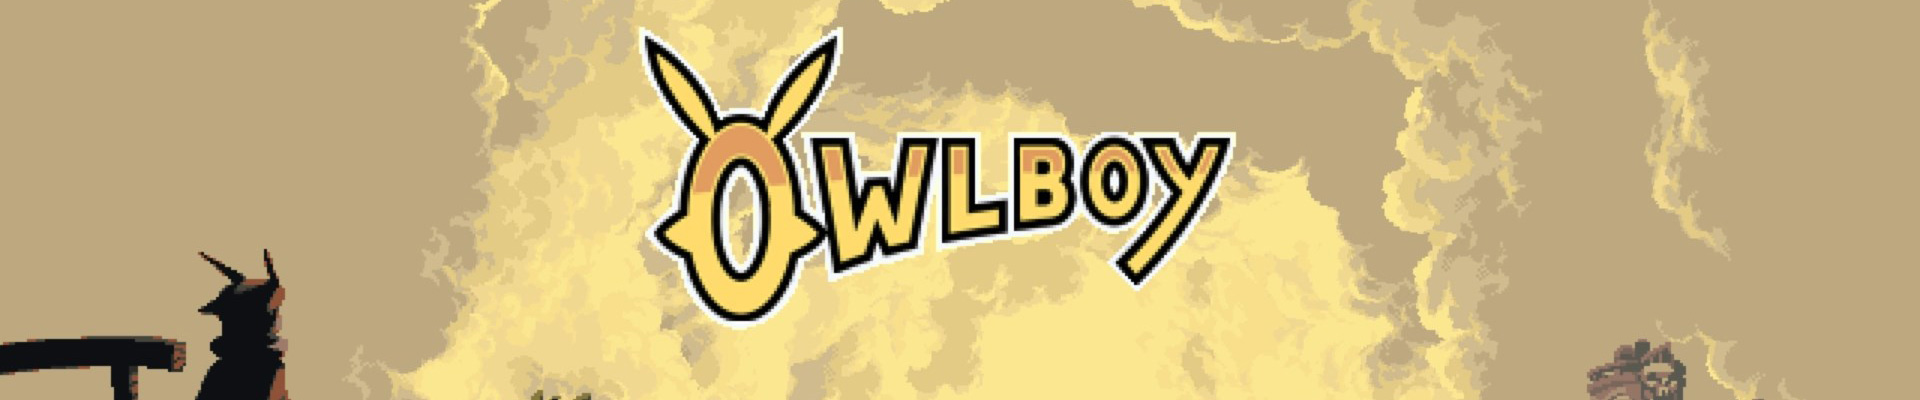 Owlboy. The [un]forgettable adventure